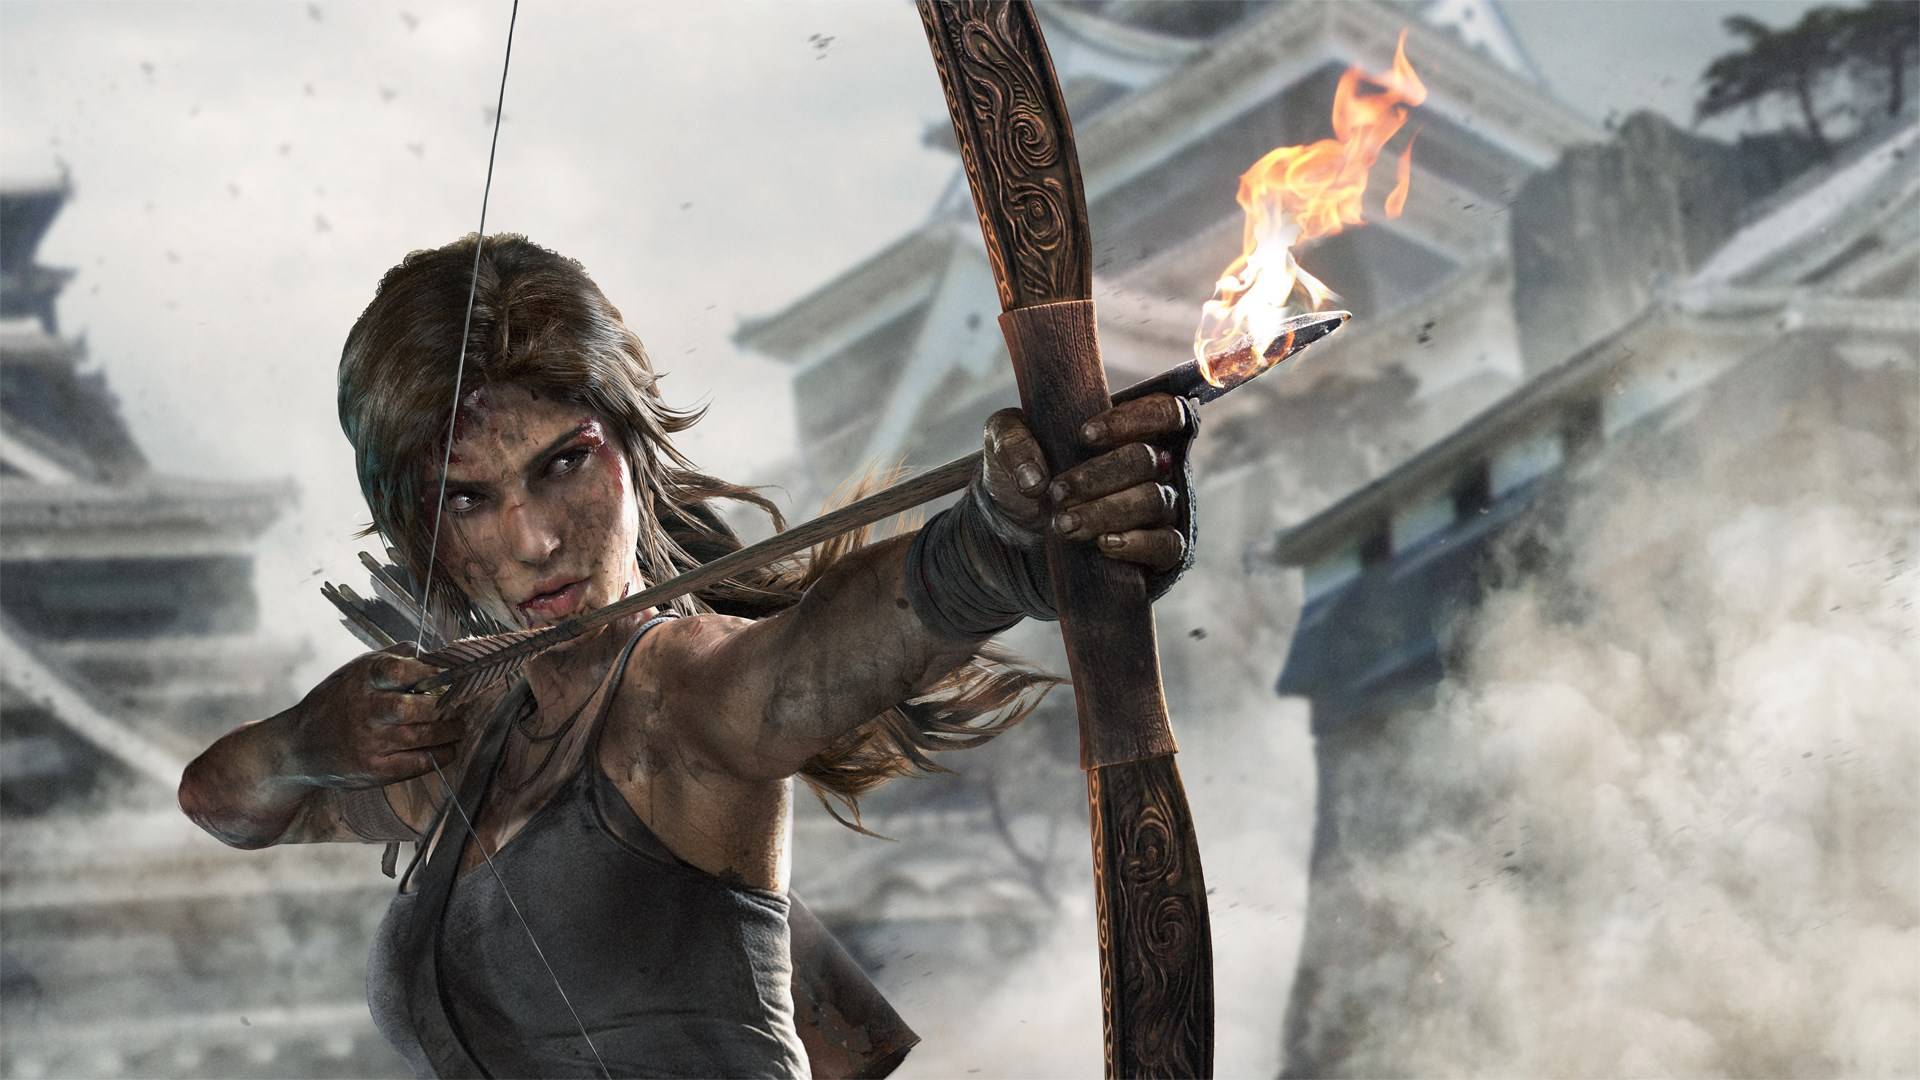 Laura Croft - Tomb Raider